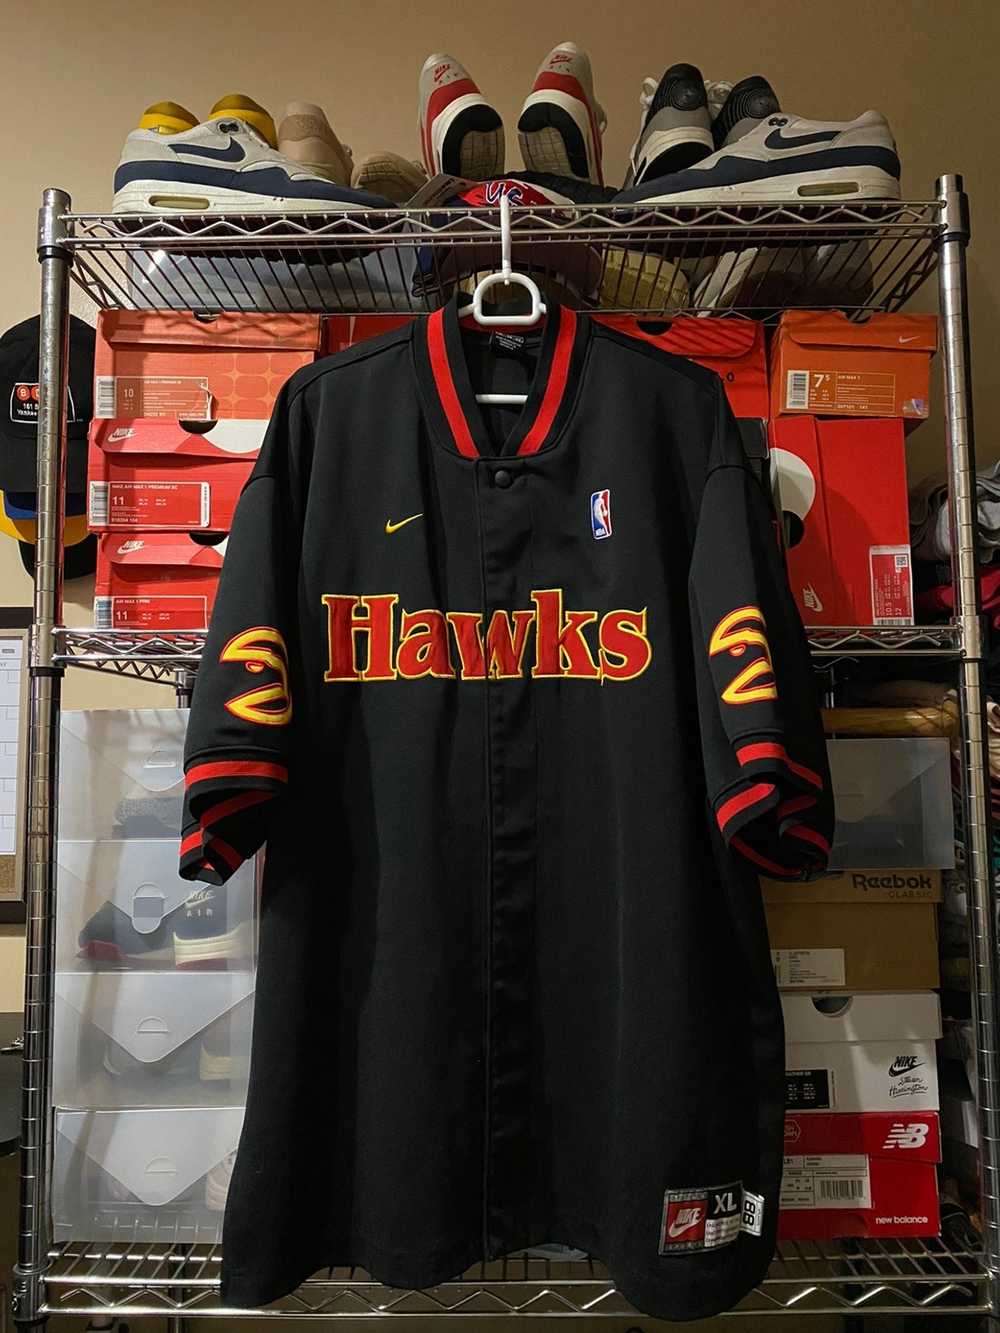 1987 Atlanta Hawks Authentic NBA Warm-Up Shirt